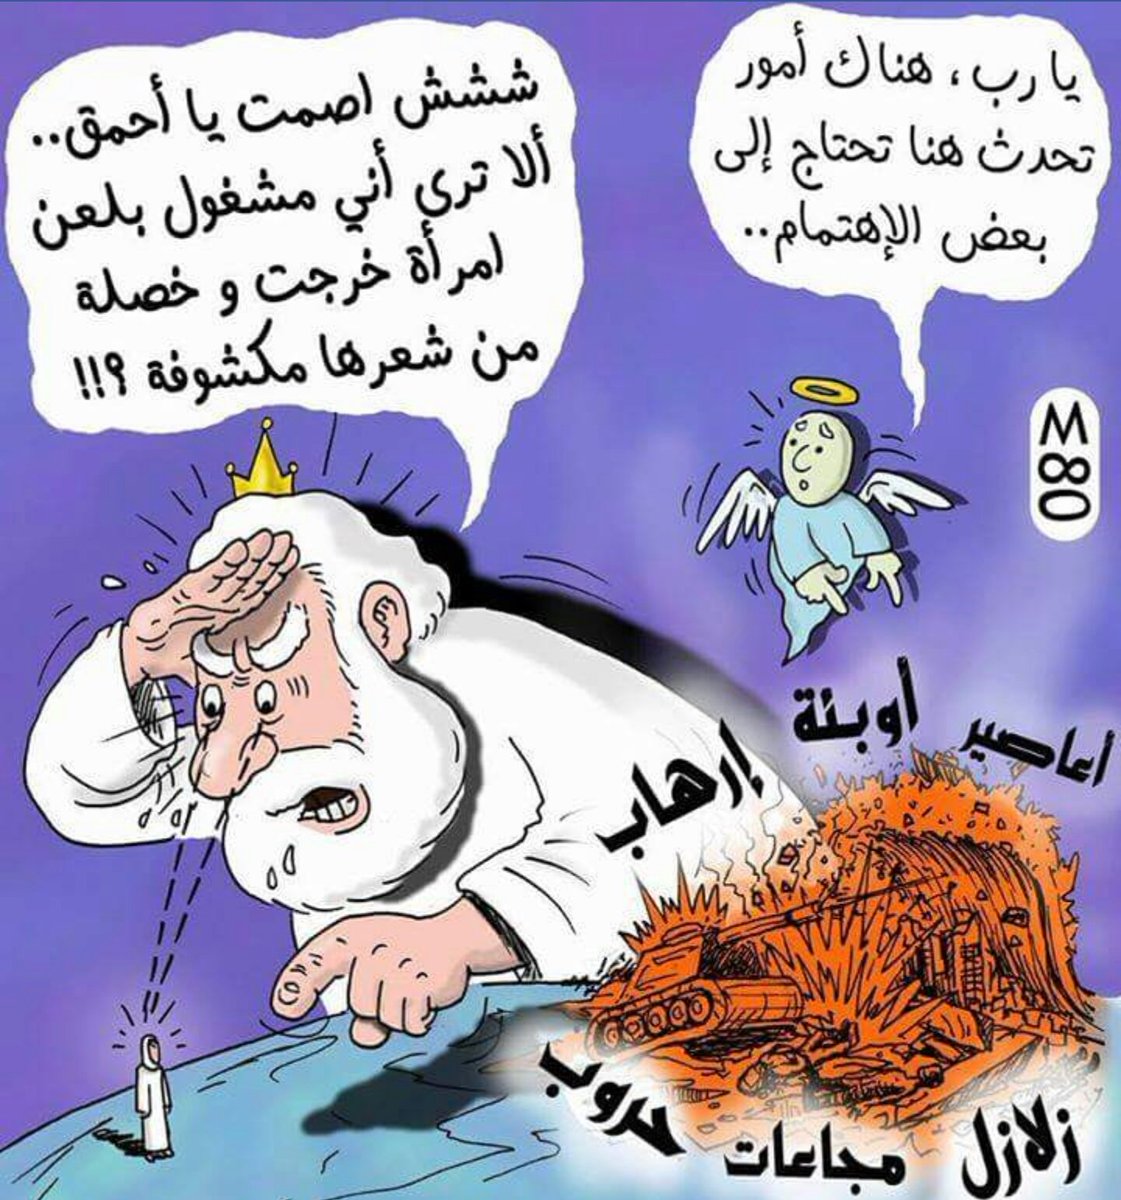 Meshal na Twitteru: "ما يقوم به رسام الكاريكاتير موسى والمعروف ب (M80)  يعادل مئات الكتب والمقالات التي كتبت وستكتب في نقد الأديان.  https://t.co/KWD3dhX9vK" / Twitter